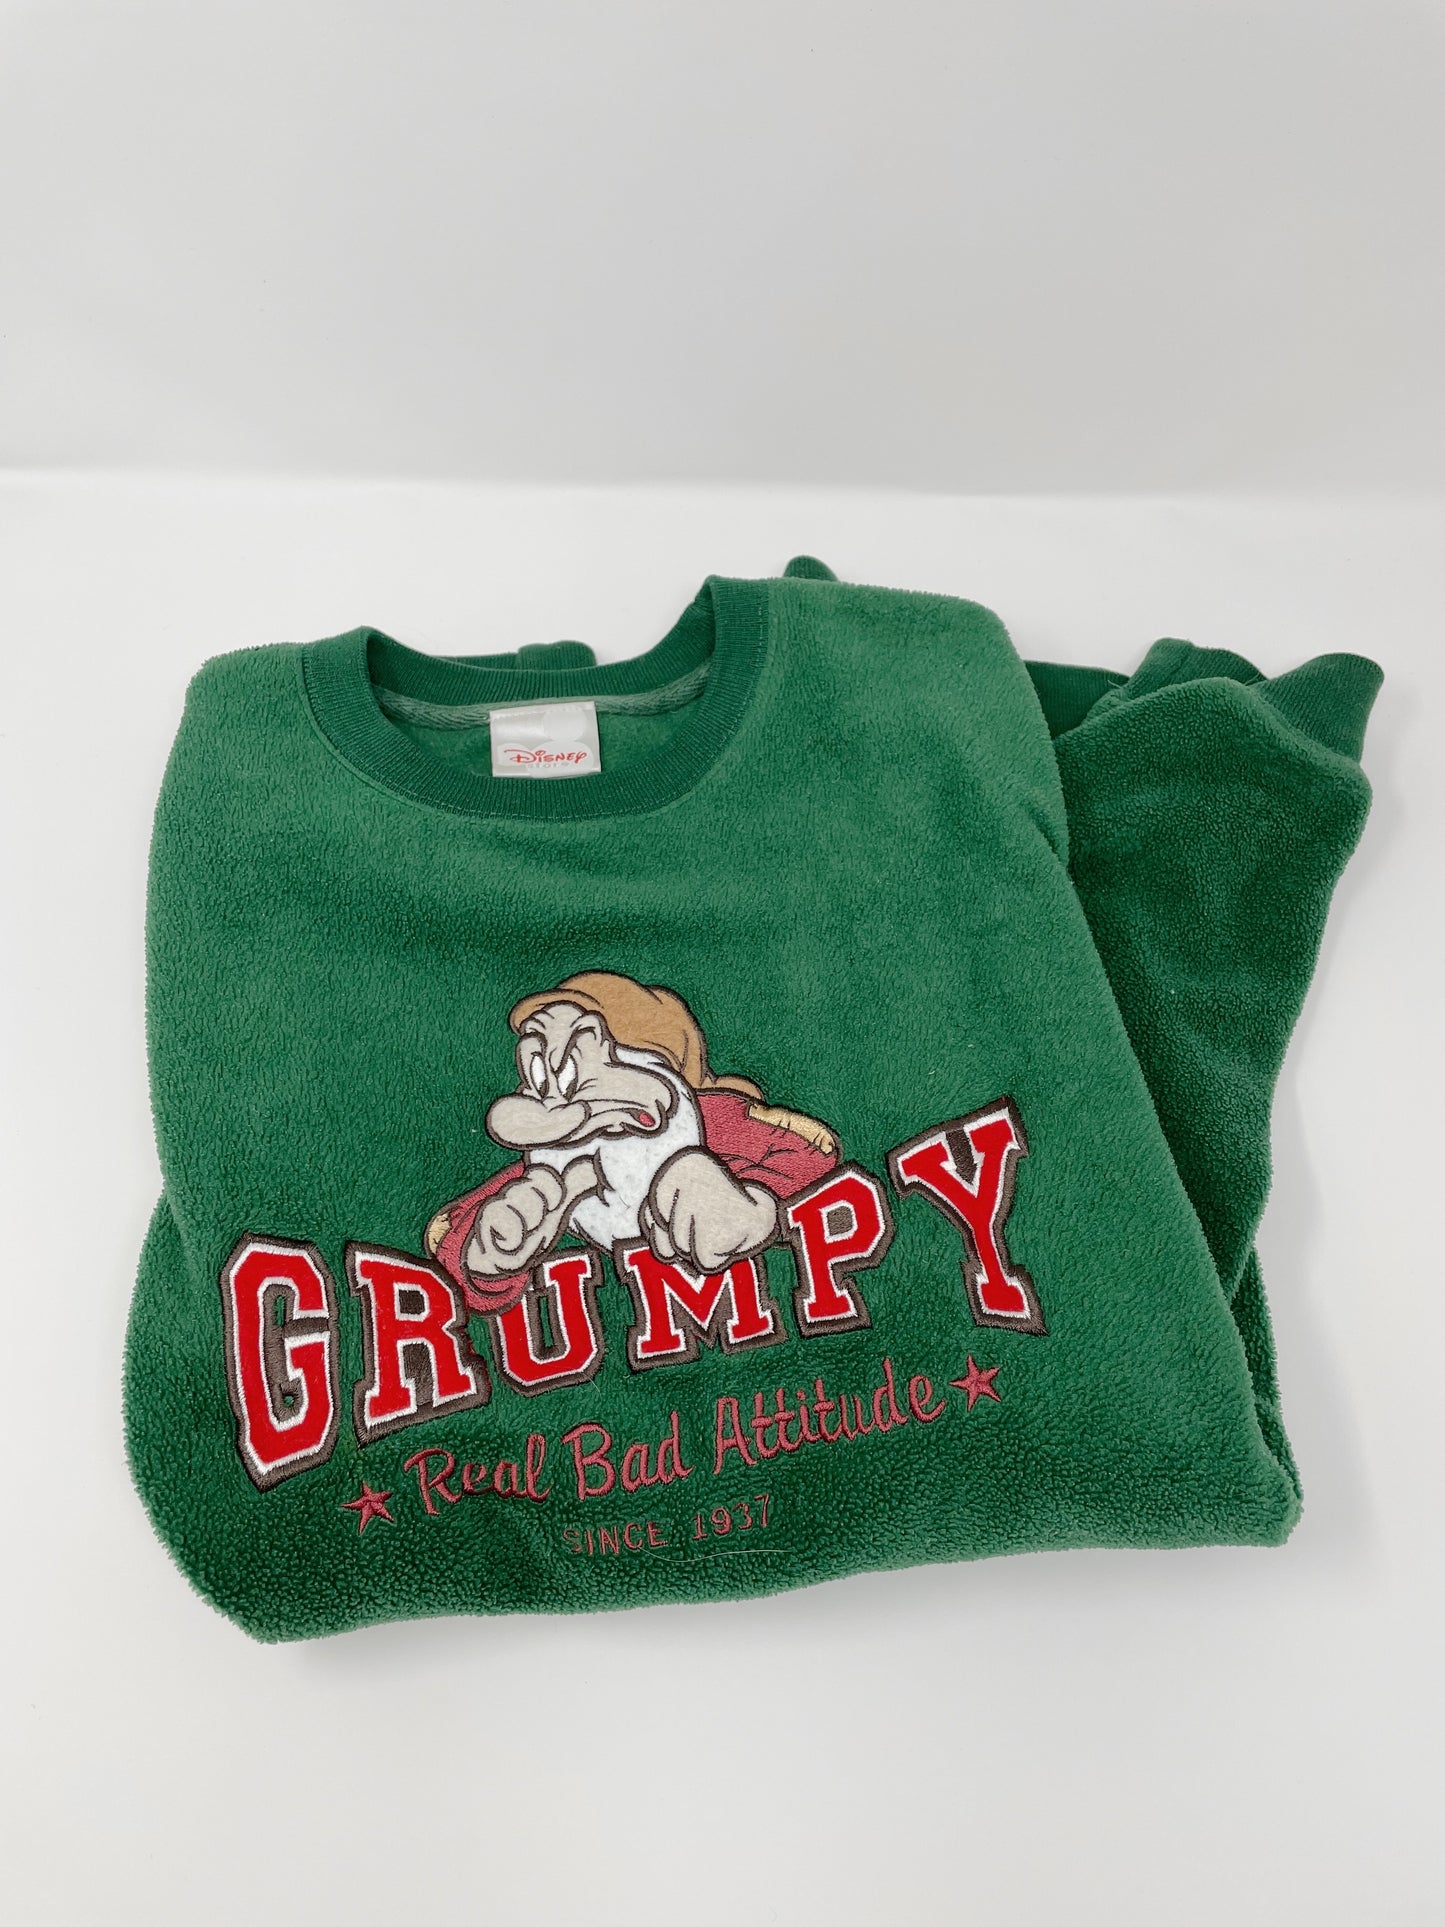 The Grumpy Sweatshirt